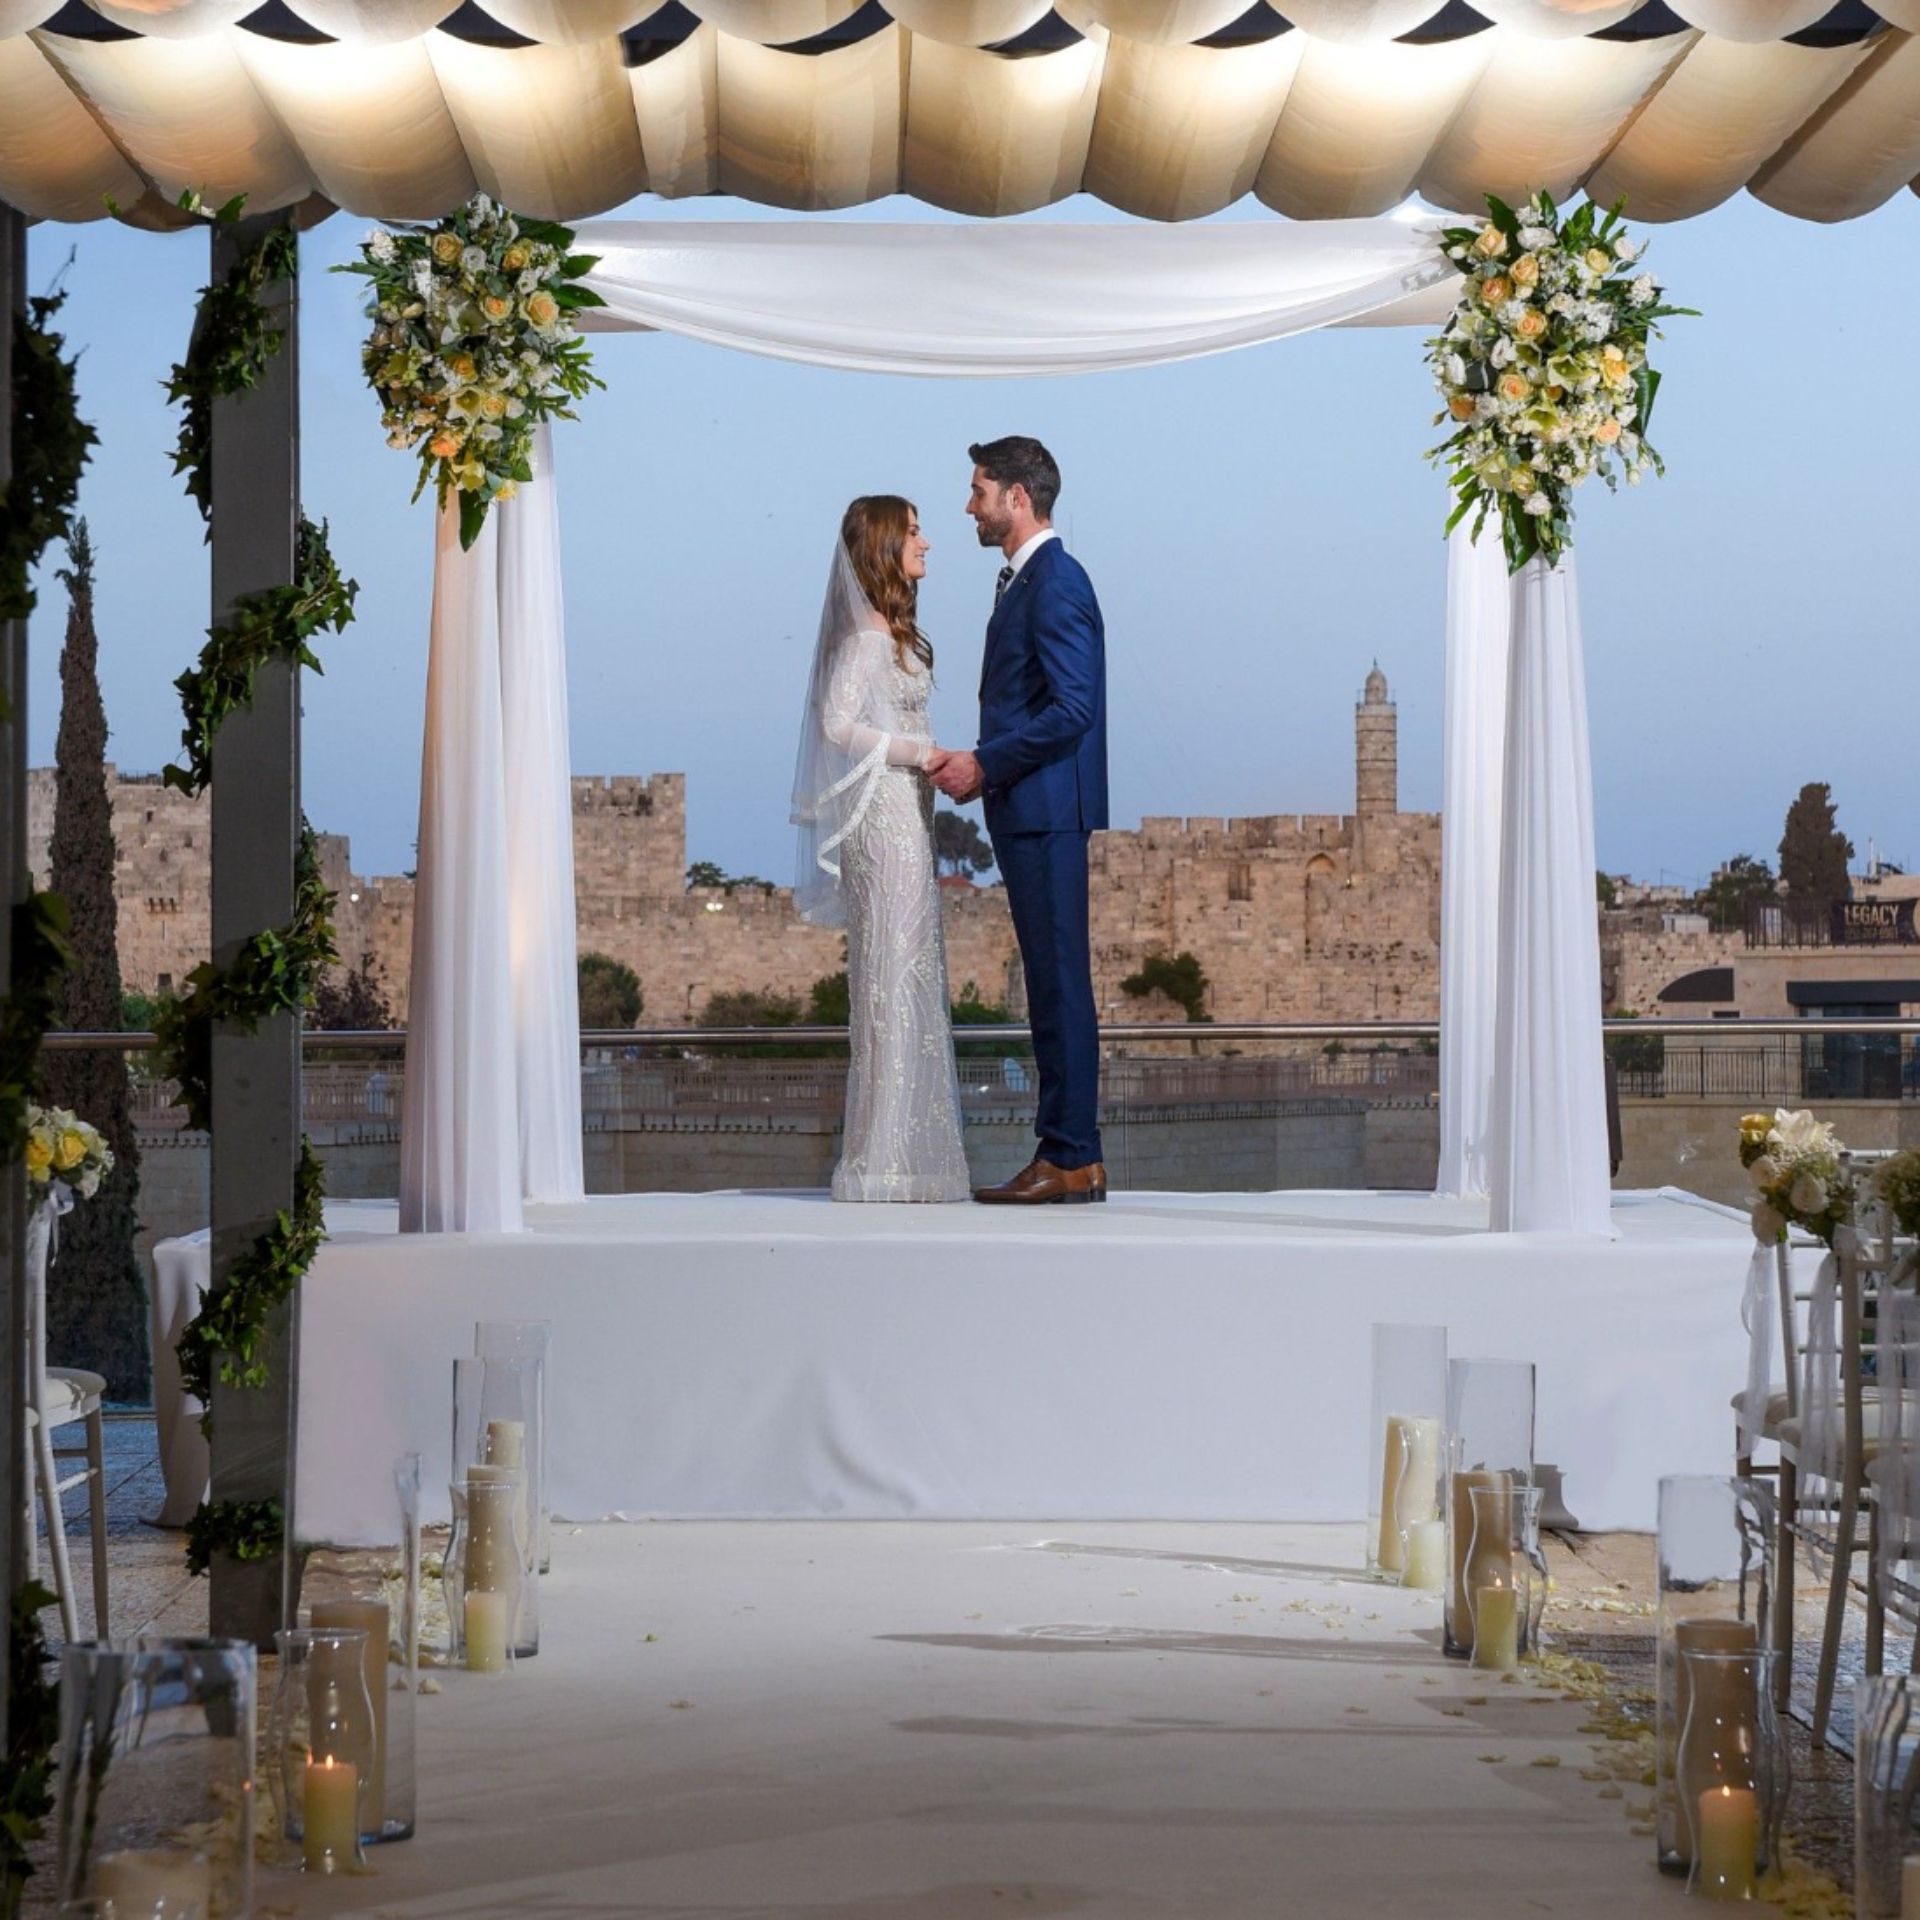 David Citadel Hotel - Weddings Old Jerusalem City View